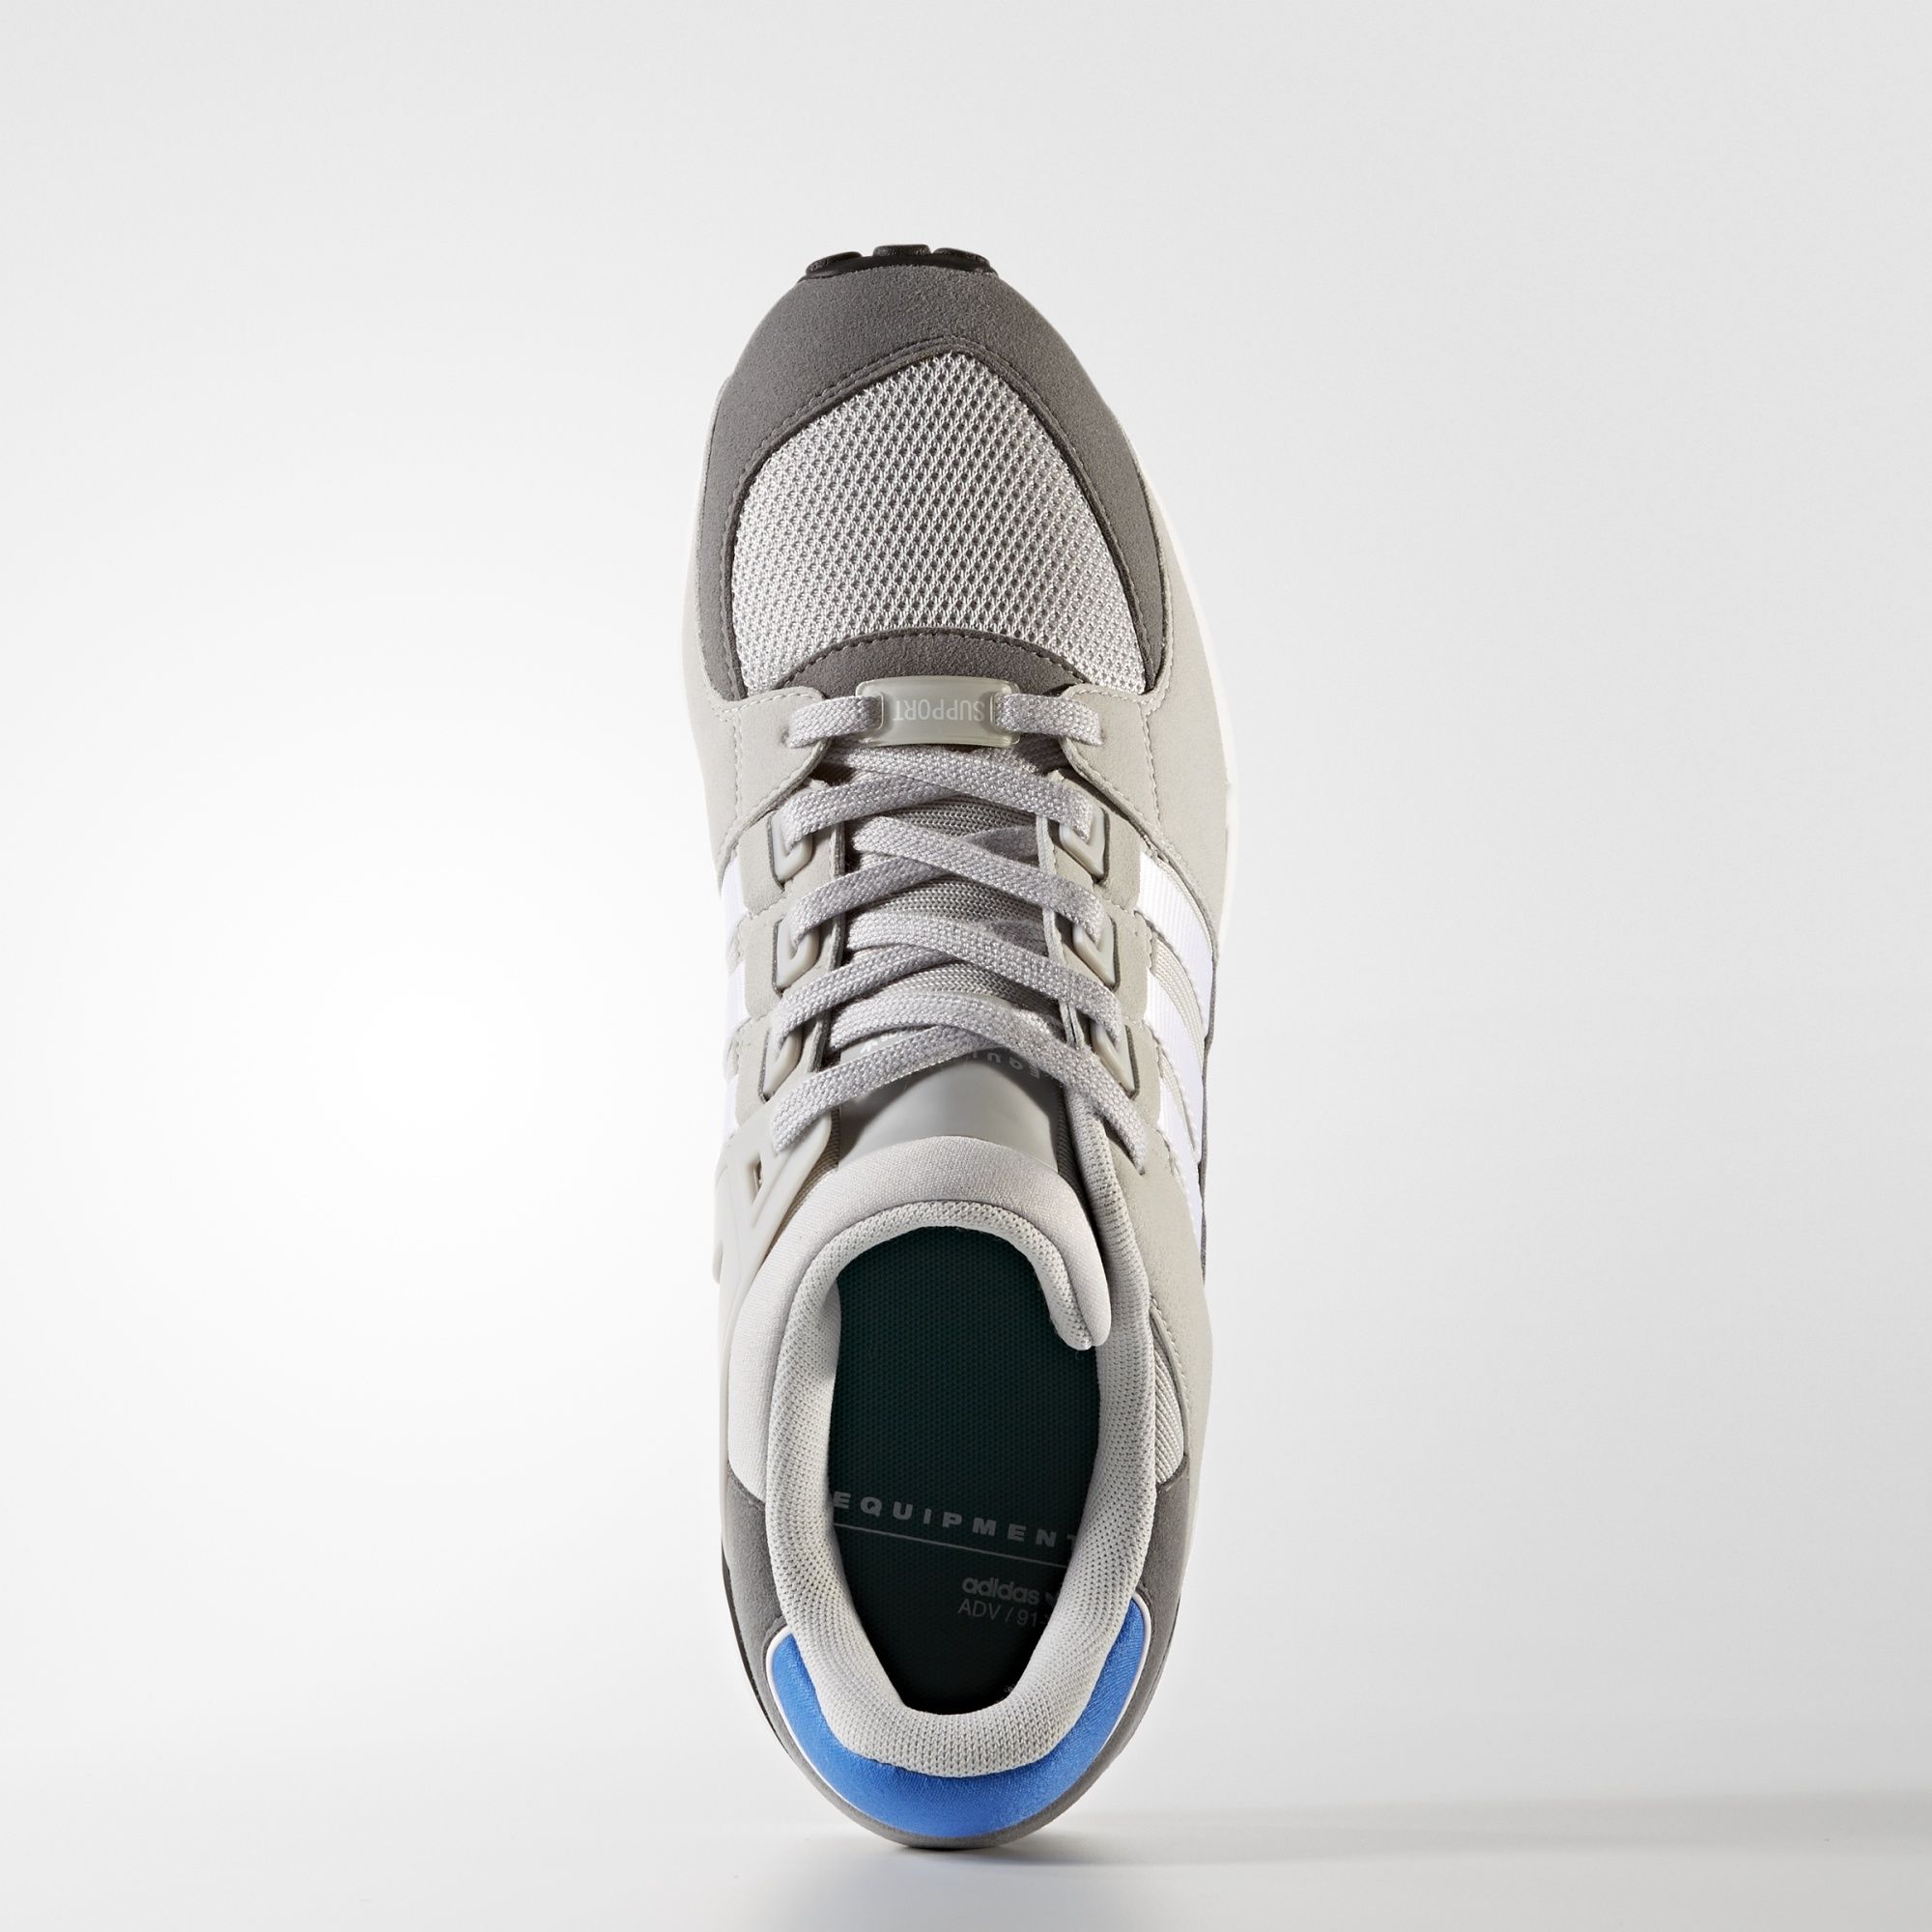 Adidas EQT Support RF
Grey / White